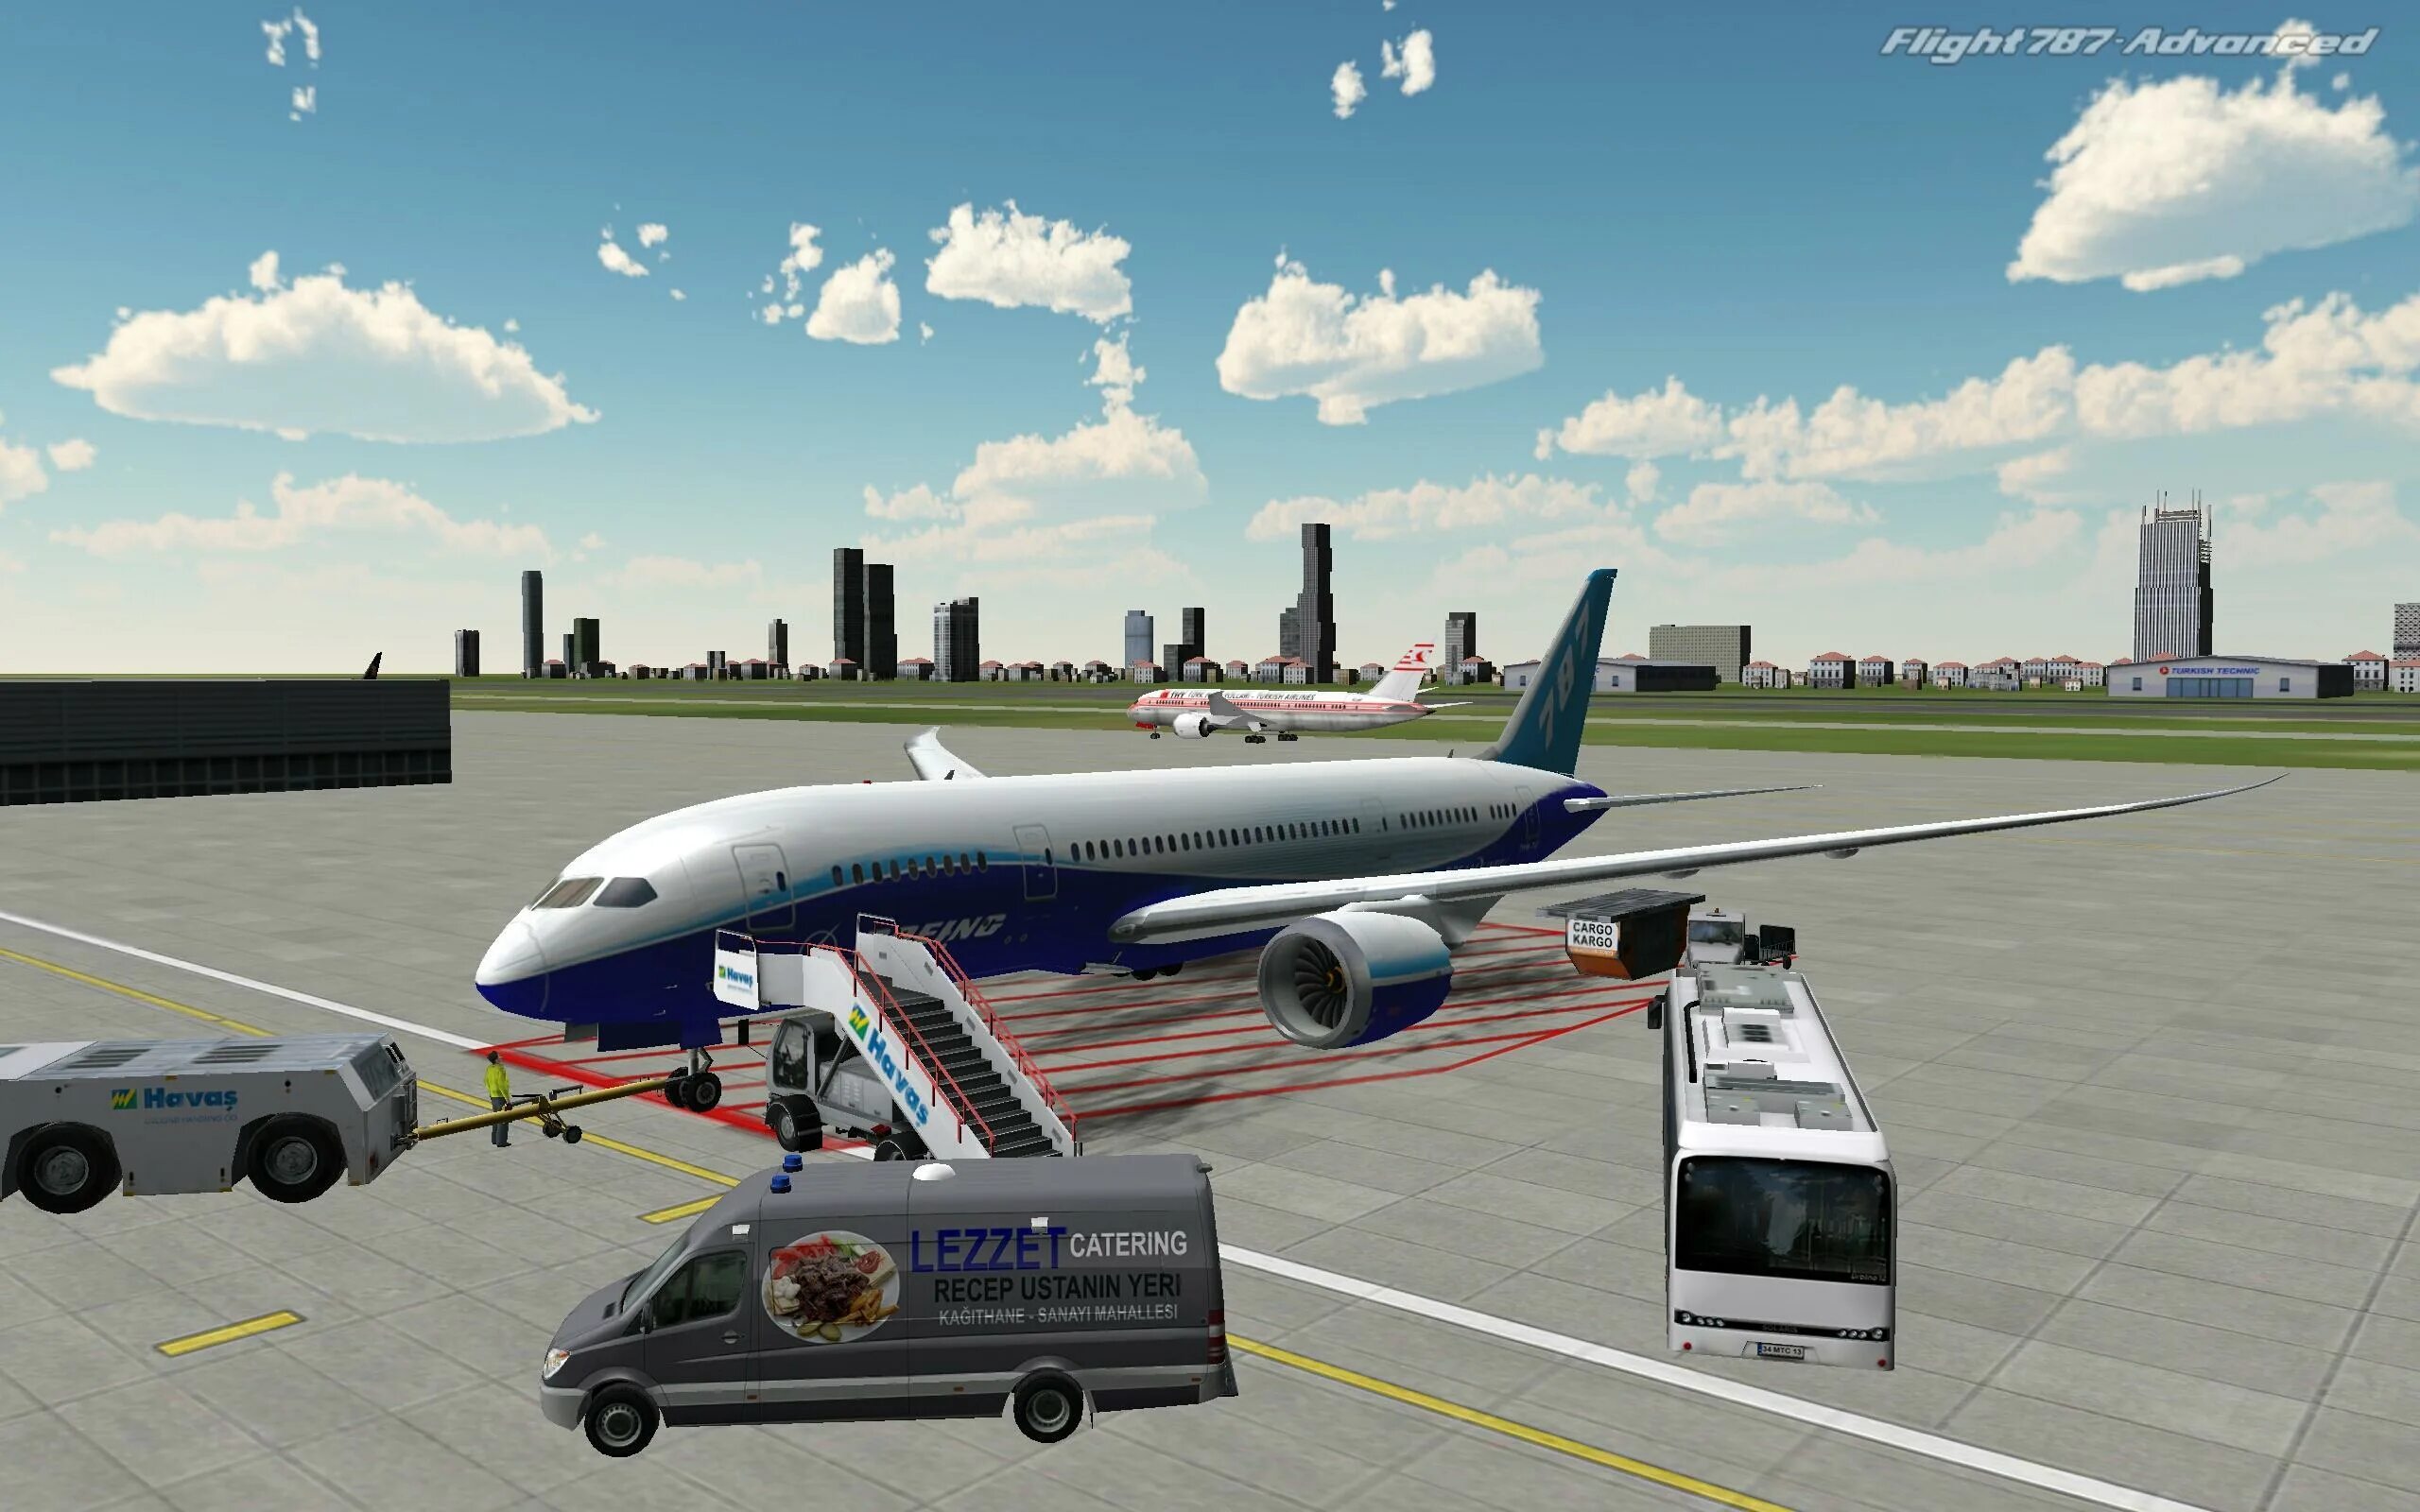 Flight 787 - Advanced. Реал Флайт симулятор. Авиасимулятор ВДНХ. Симулятор самолета пассажирского.